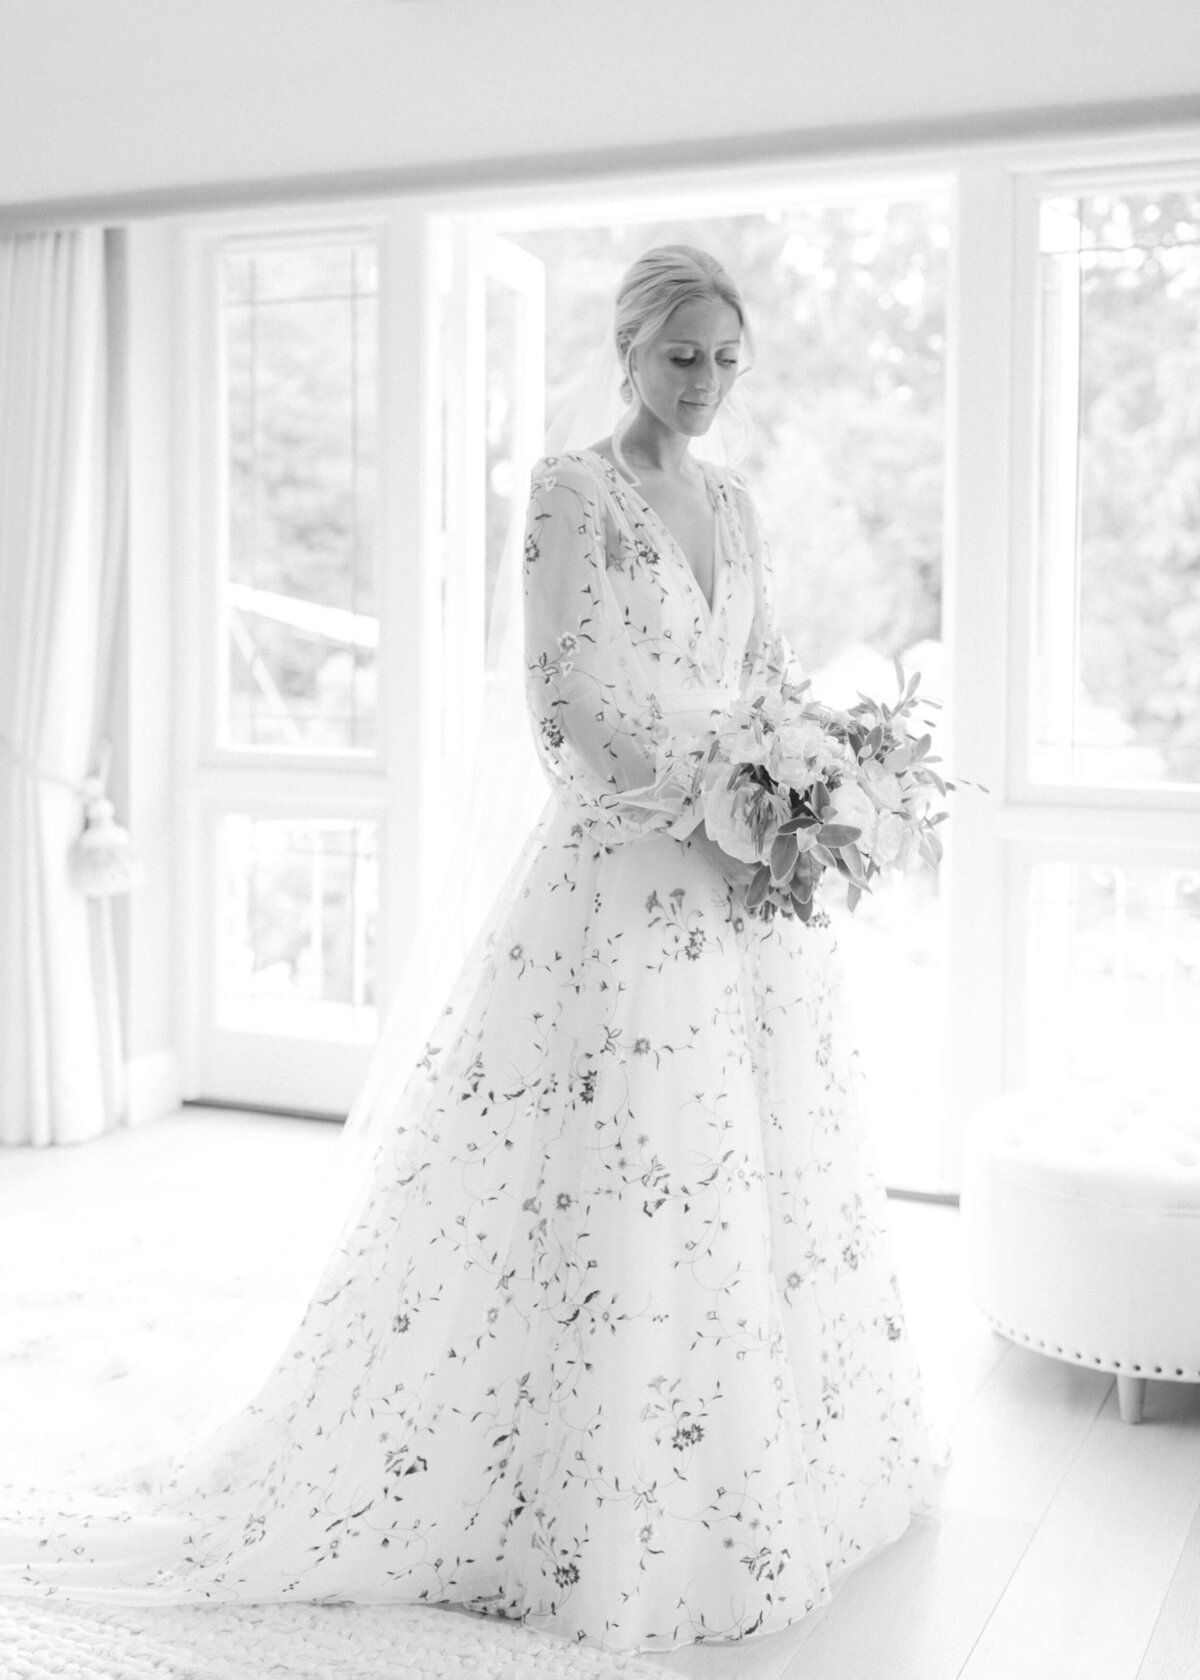 chloe-winstanley-weddings-sassi-holford-bride-portrait-black-white